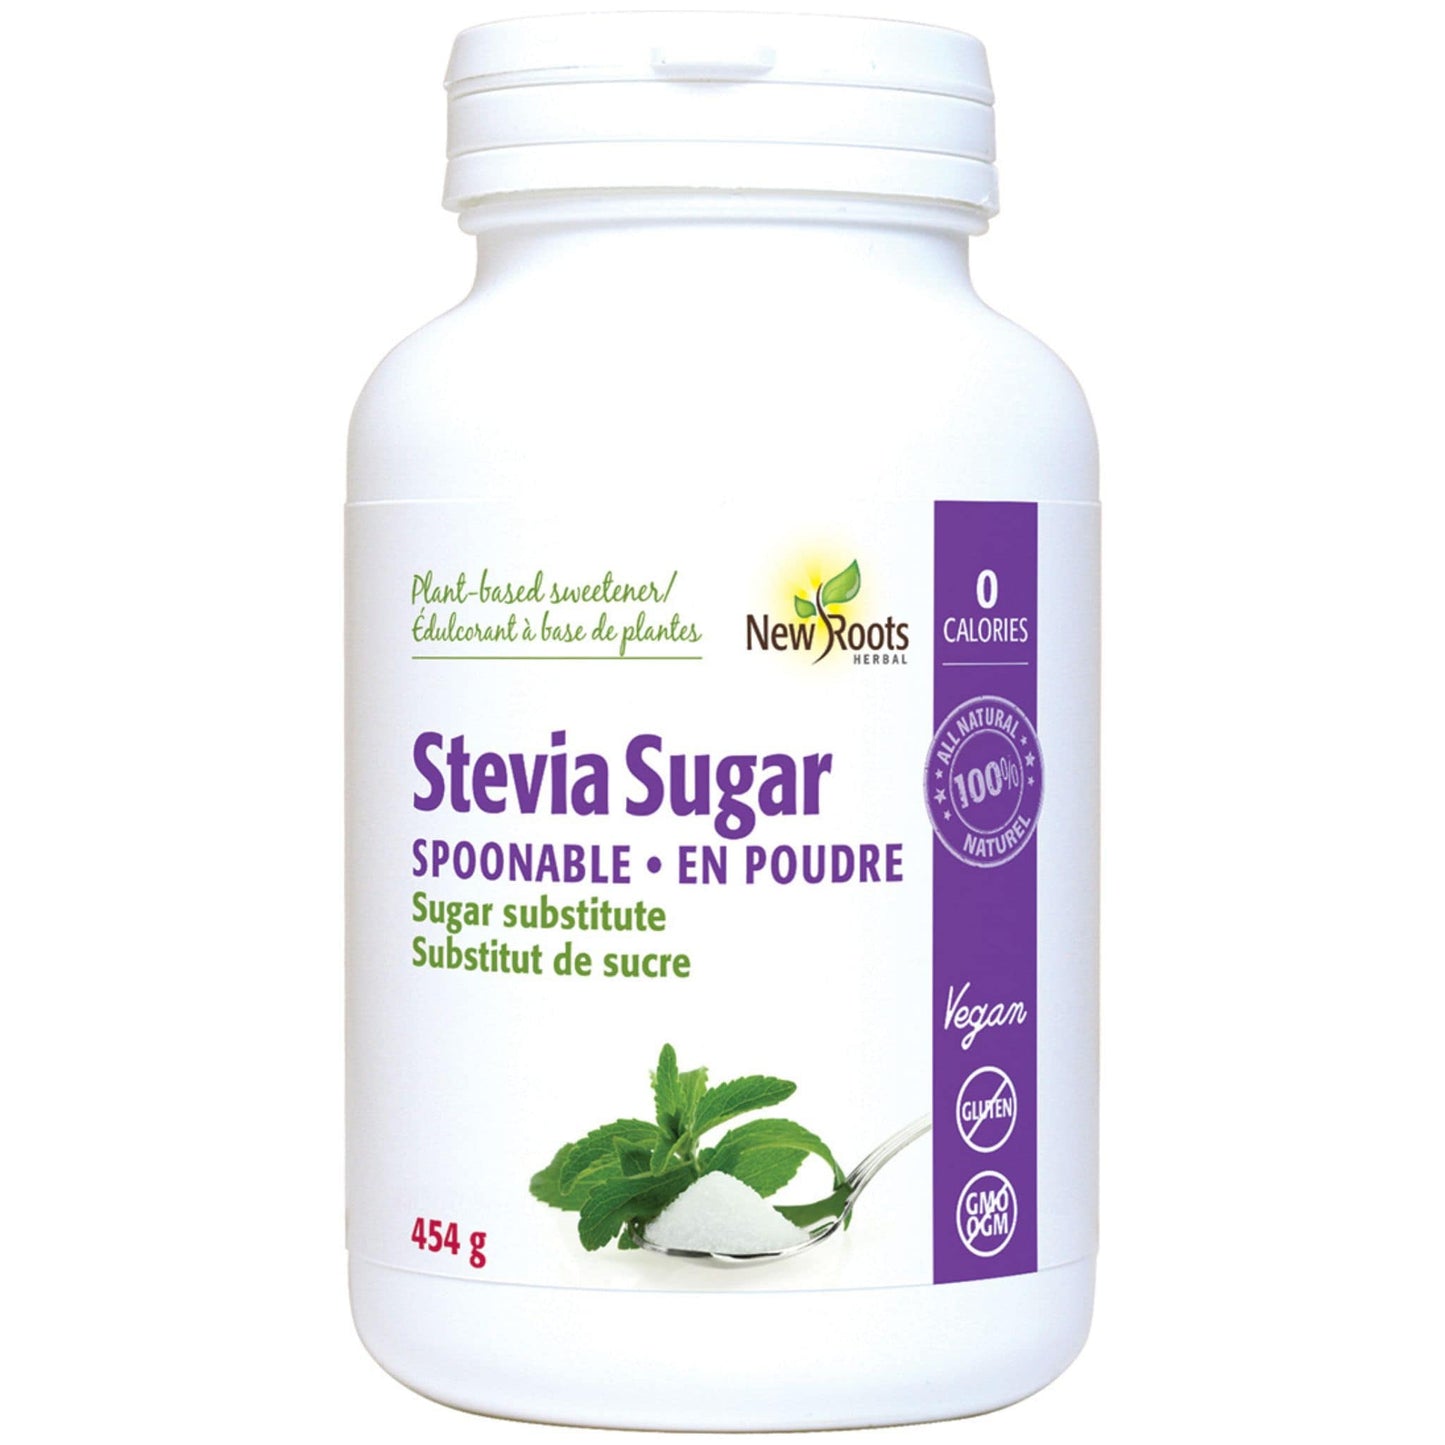 New Roots Stevia Sugar Spoonable